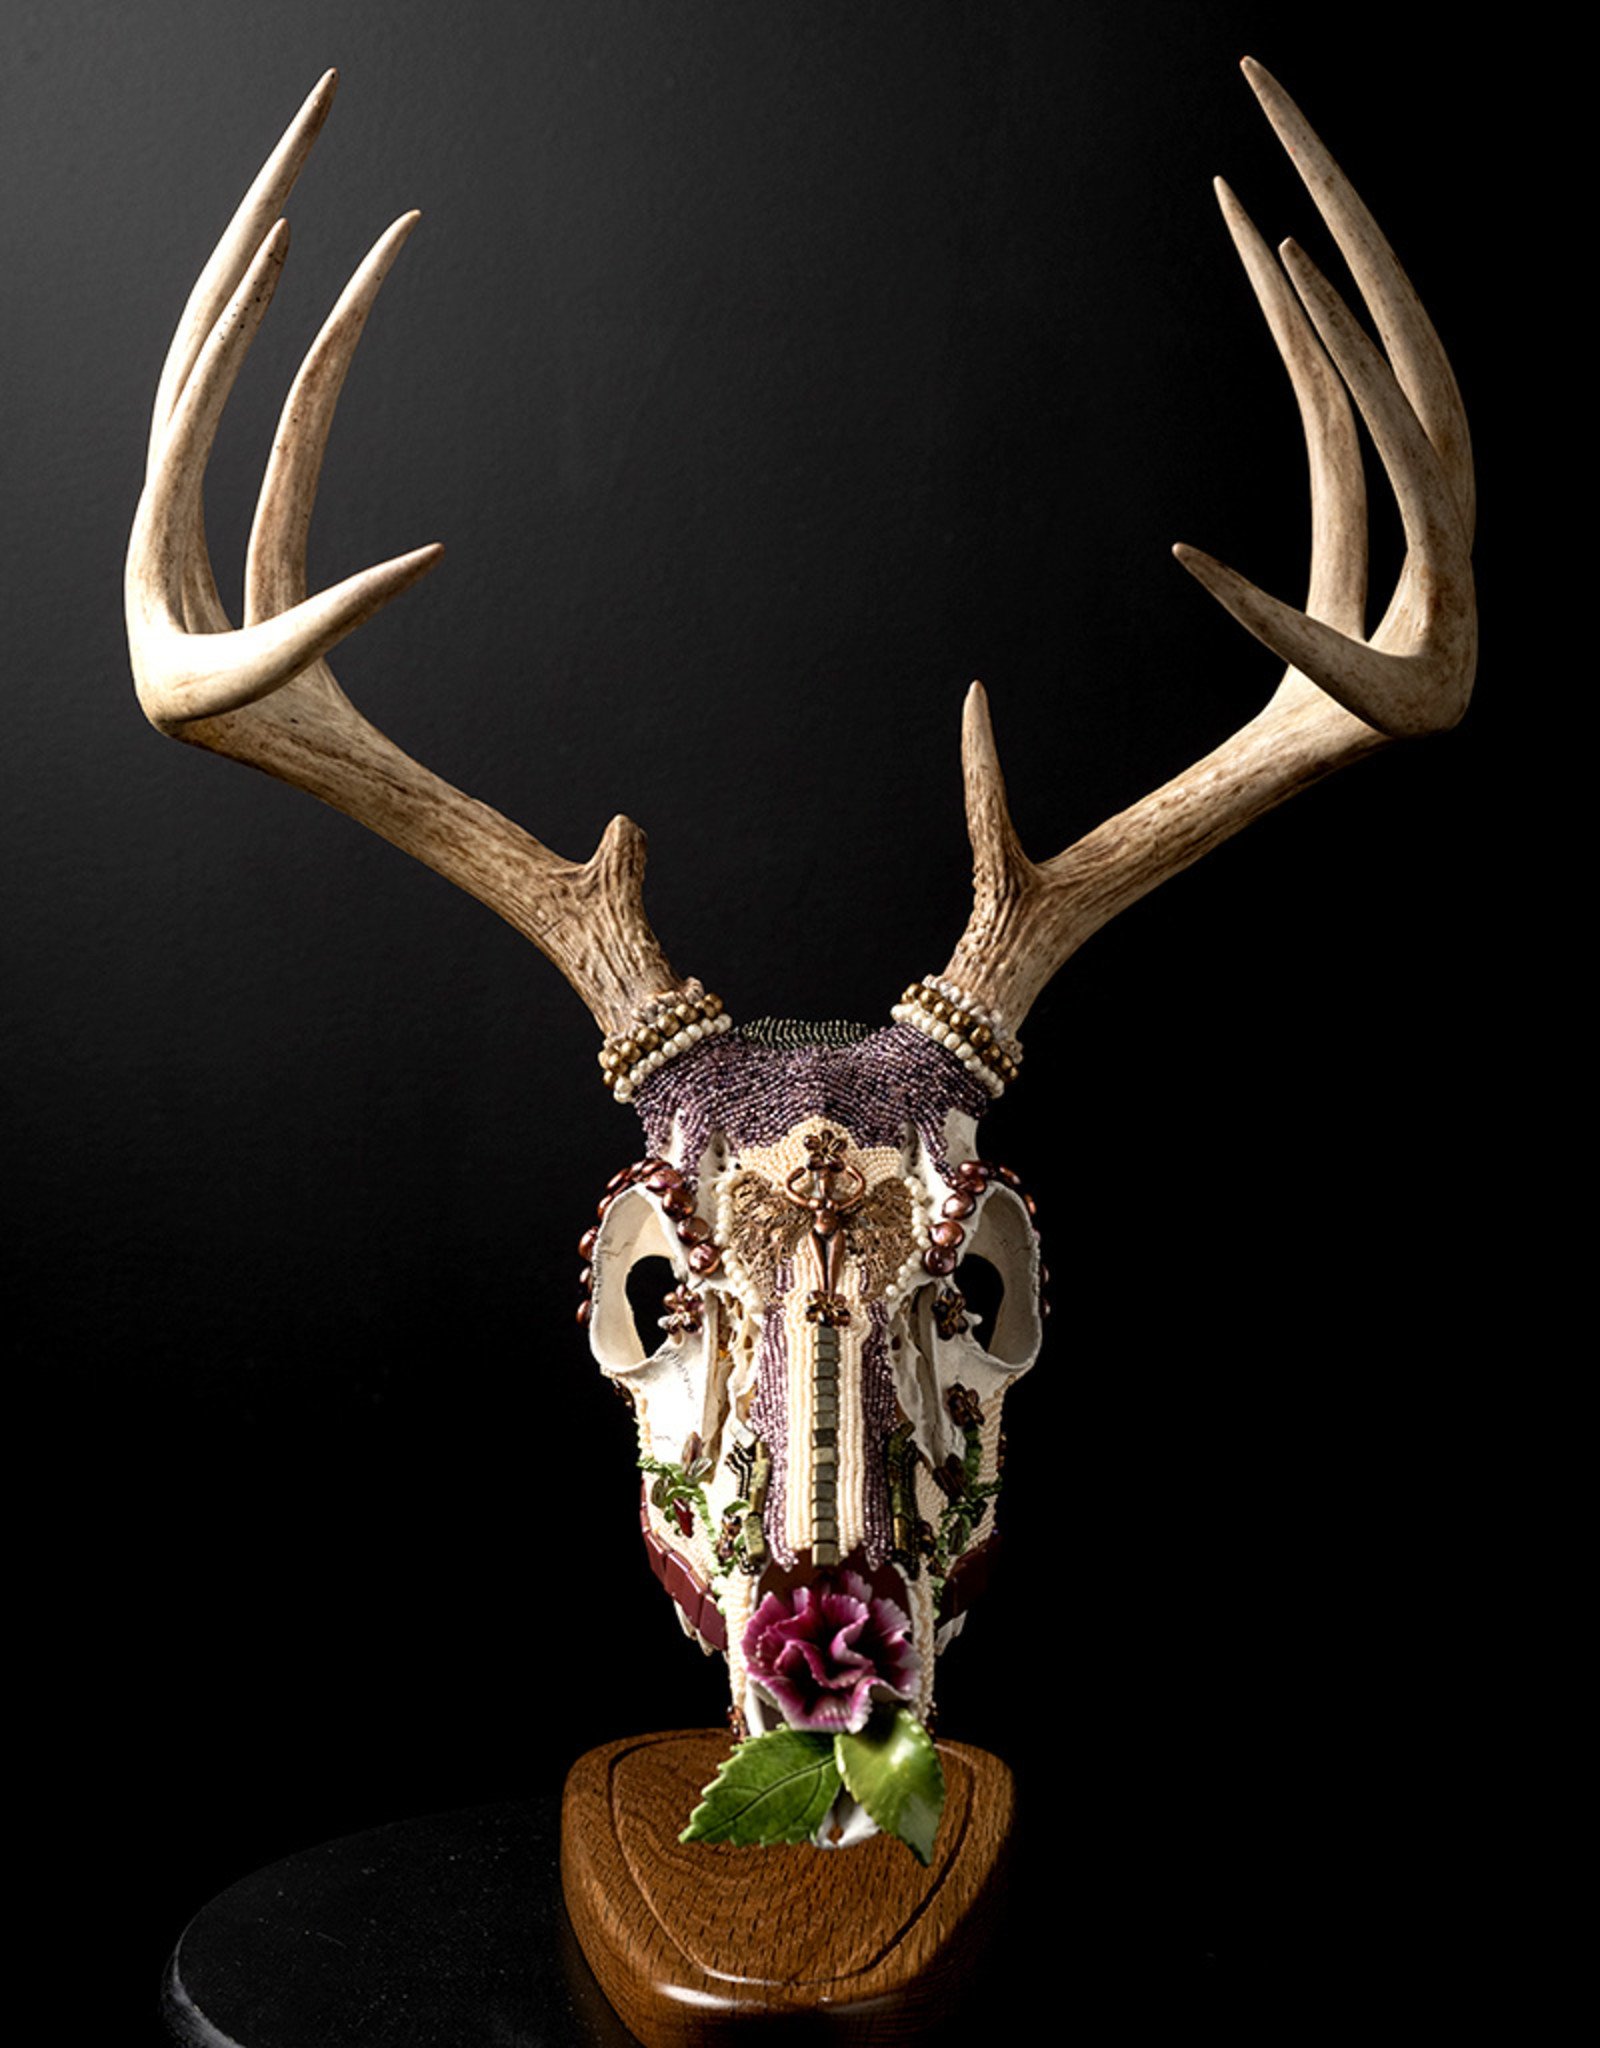 Kelly Nygard Juliette - Decorated Deer Skull - Kelly Nygard